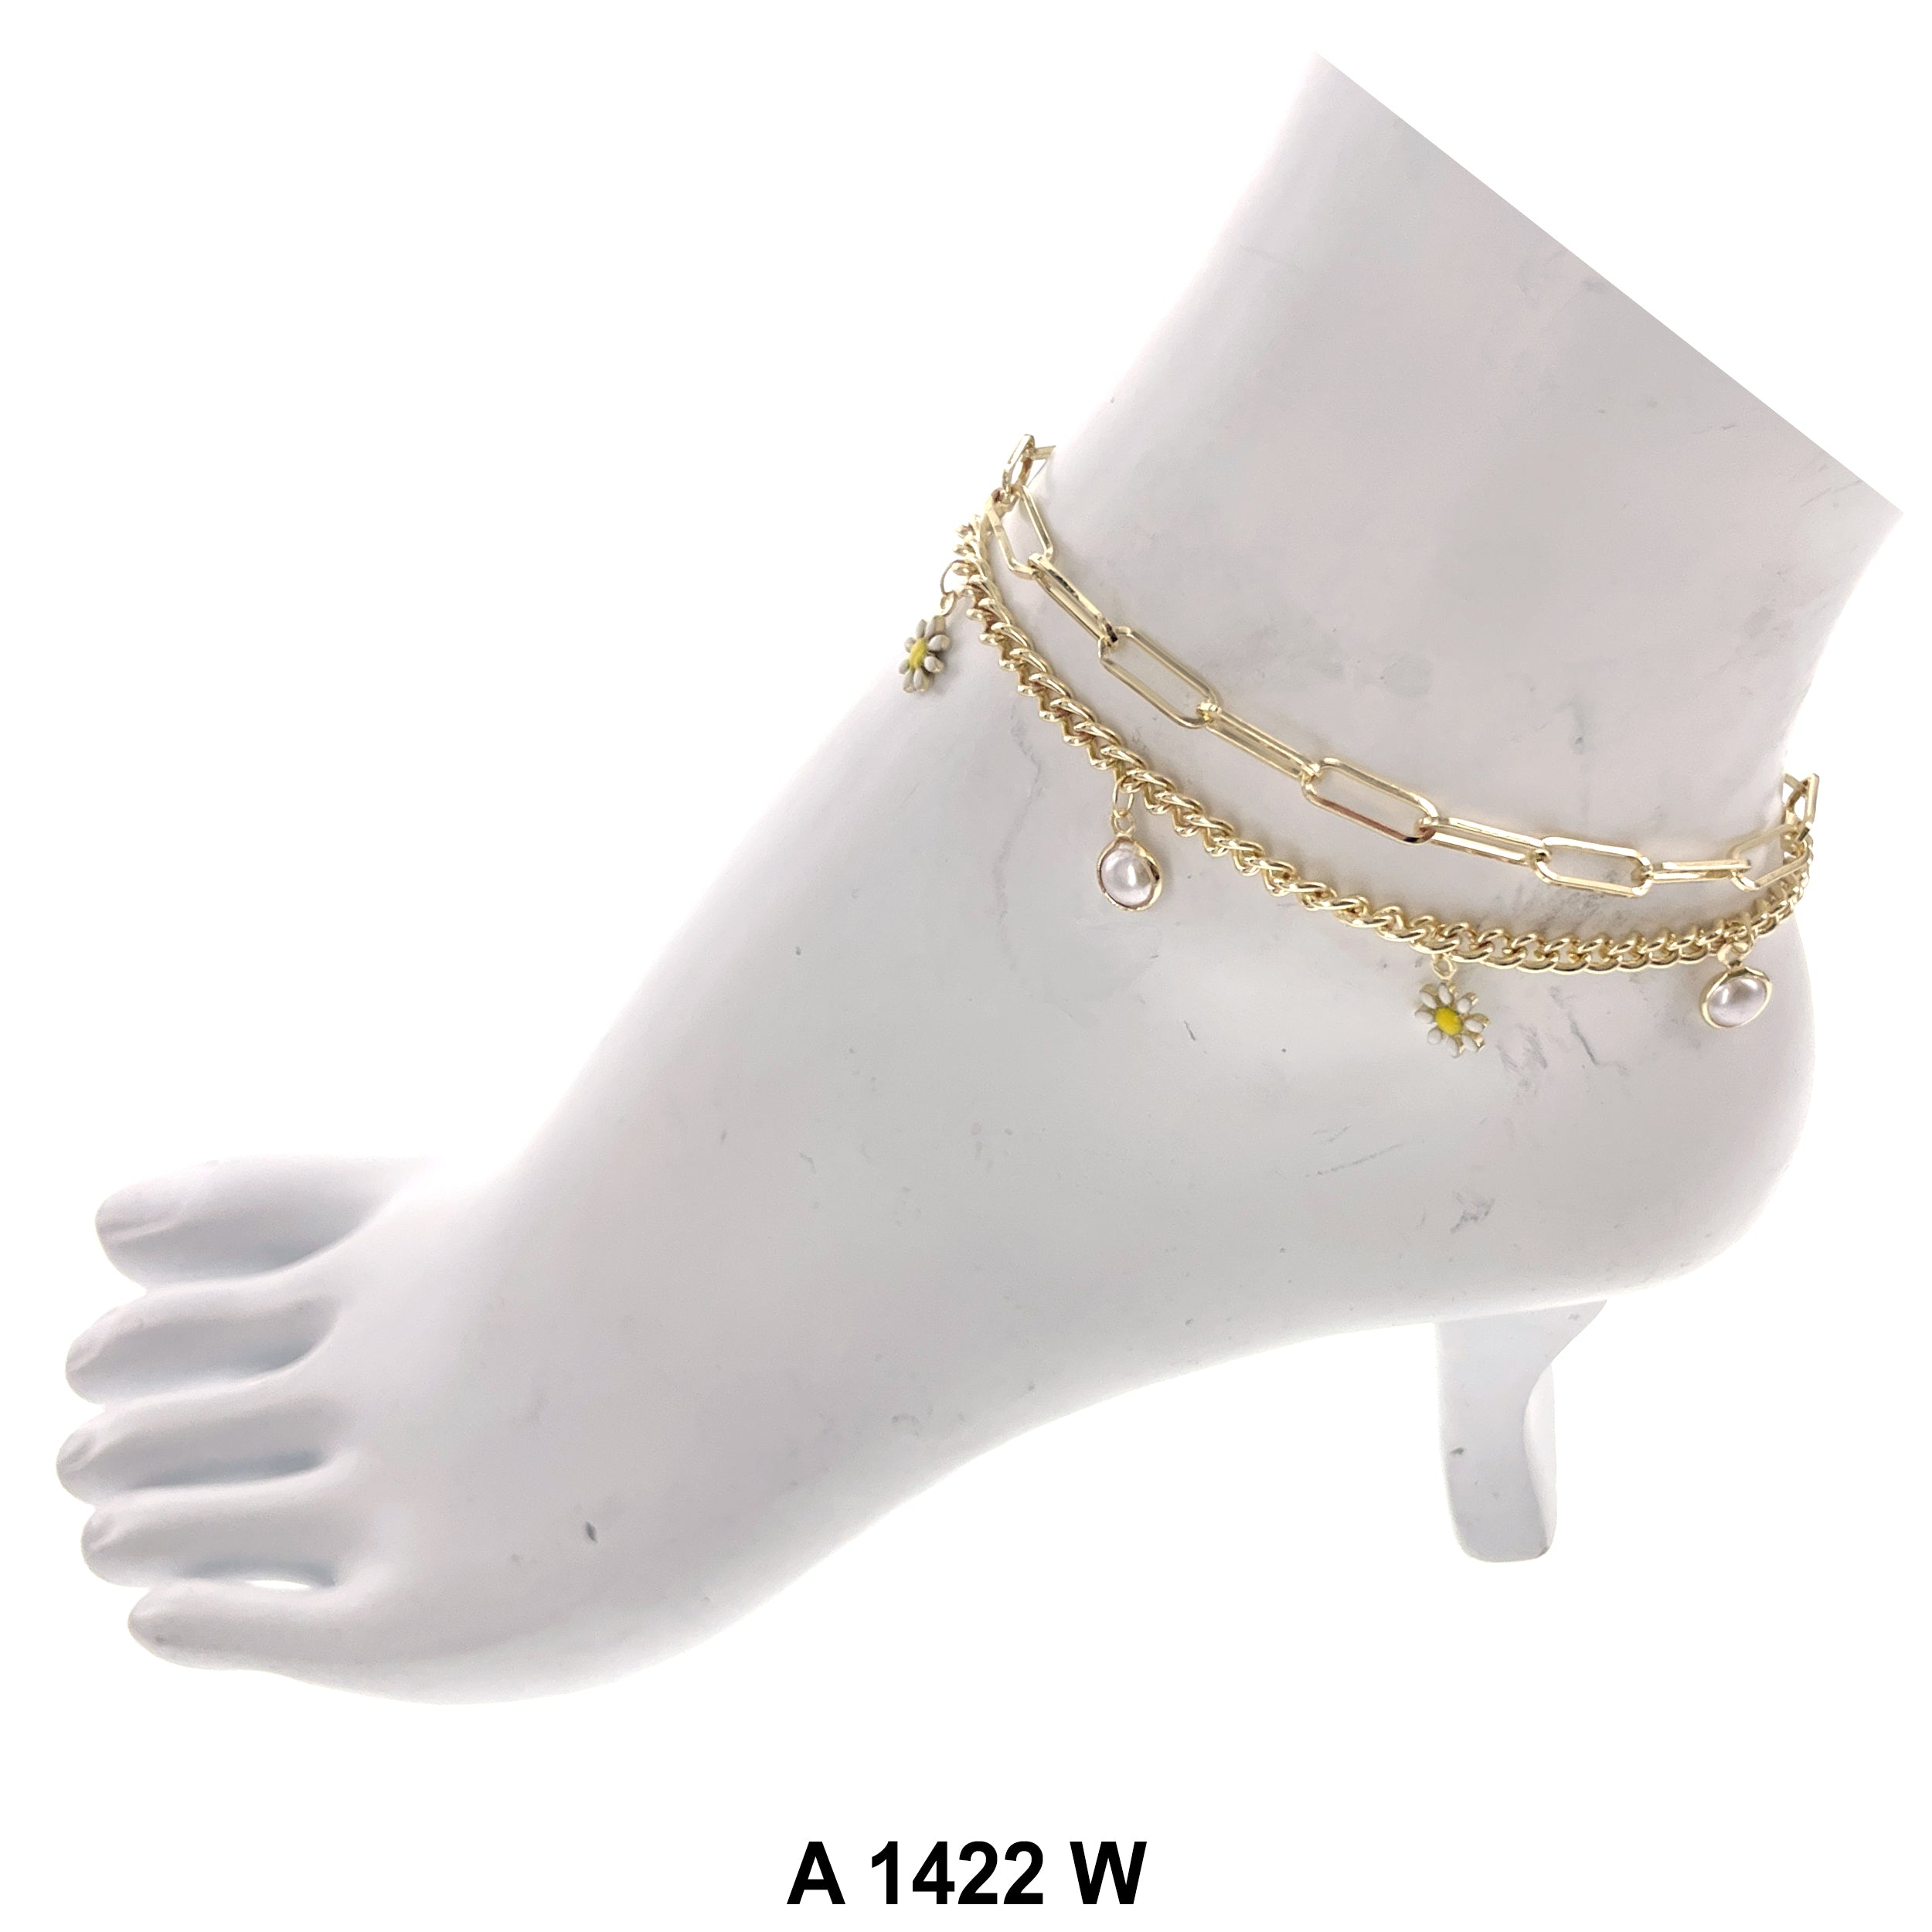 Fashion Anklets A 1422 W